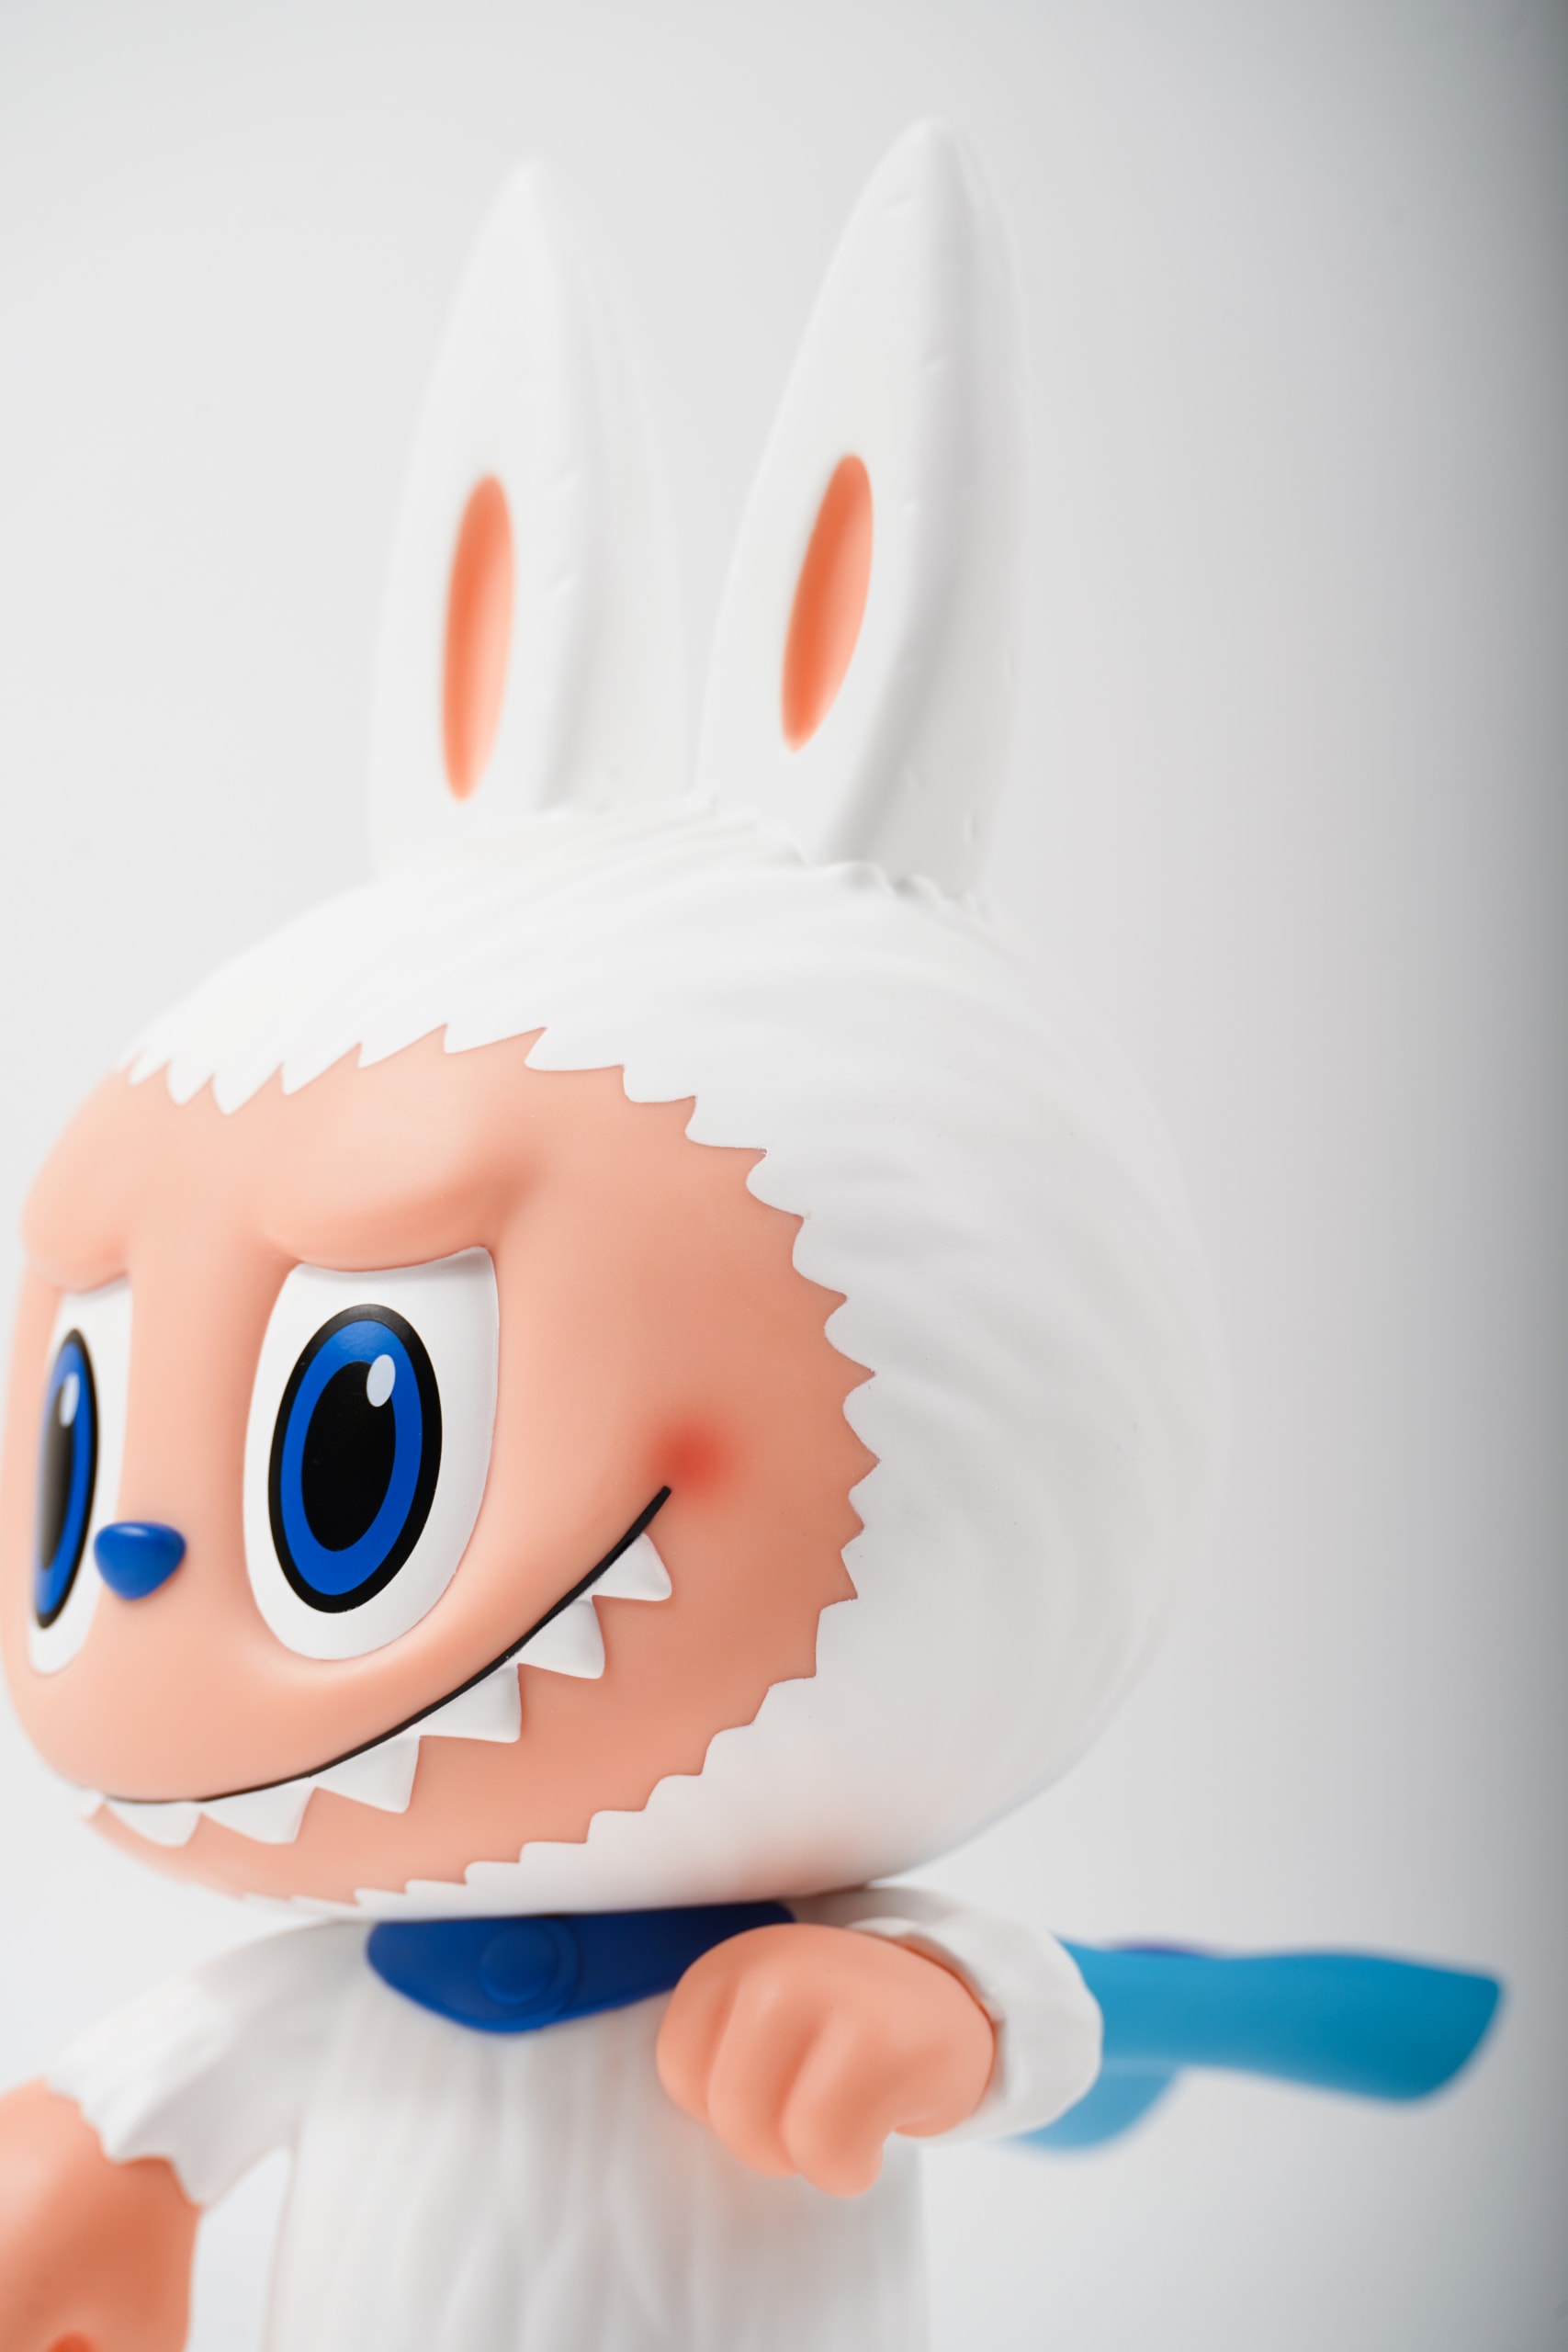 DAHOOD 成立 20 週年 KASING LUNG × 432Hz 聯乘紀念 ZIMOMO 藝術珍藏玩具正式登場